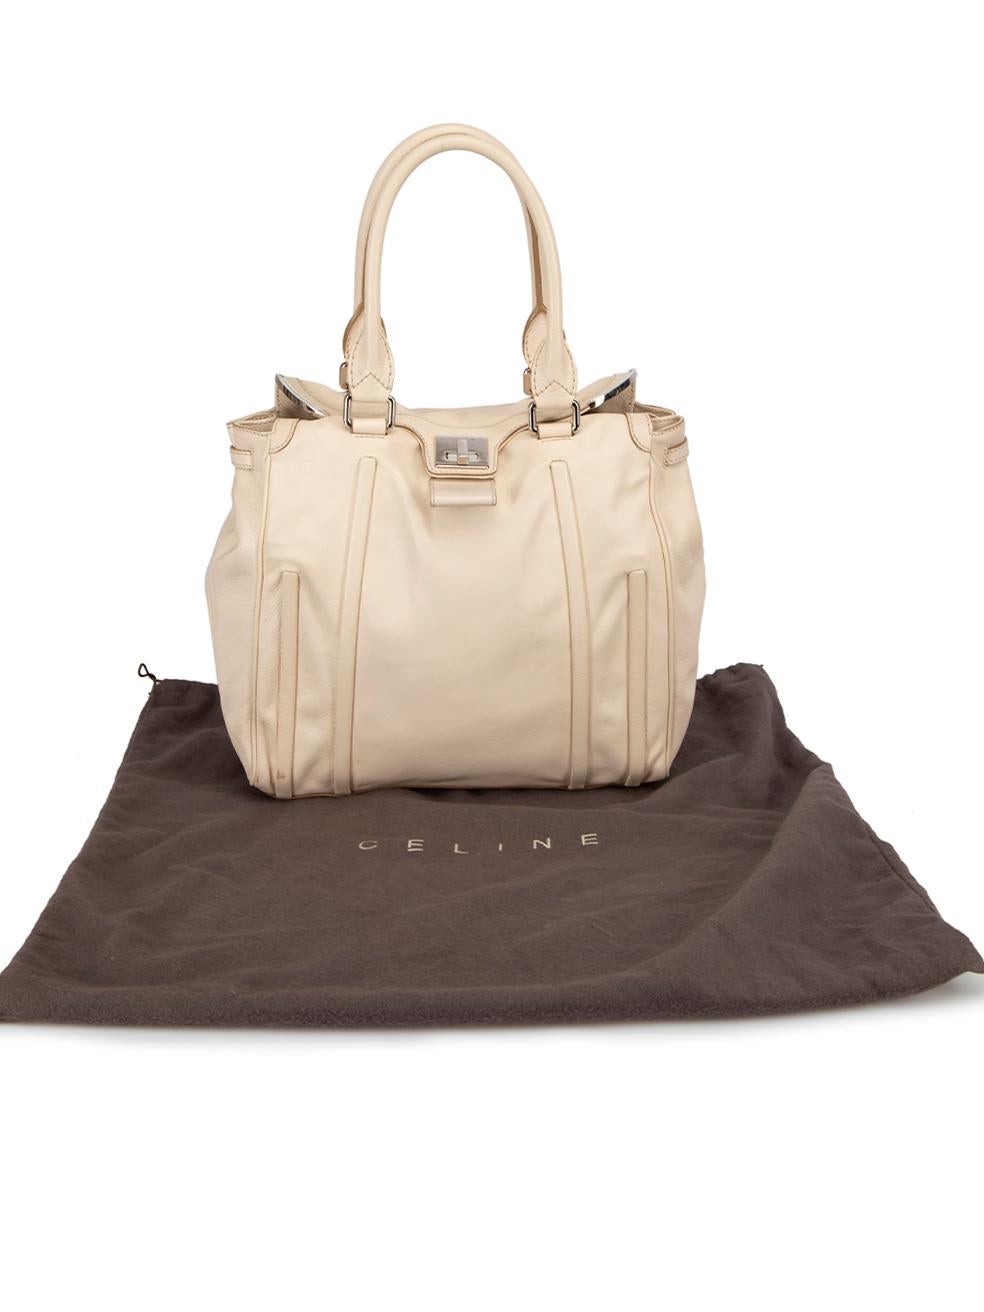 Céline Women's Cream Leather Large Tote Bag 3